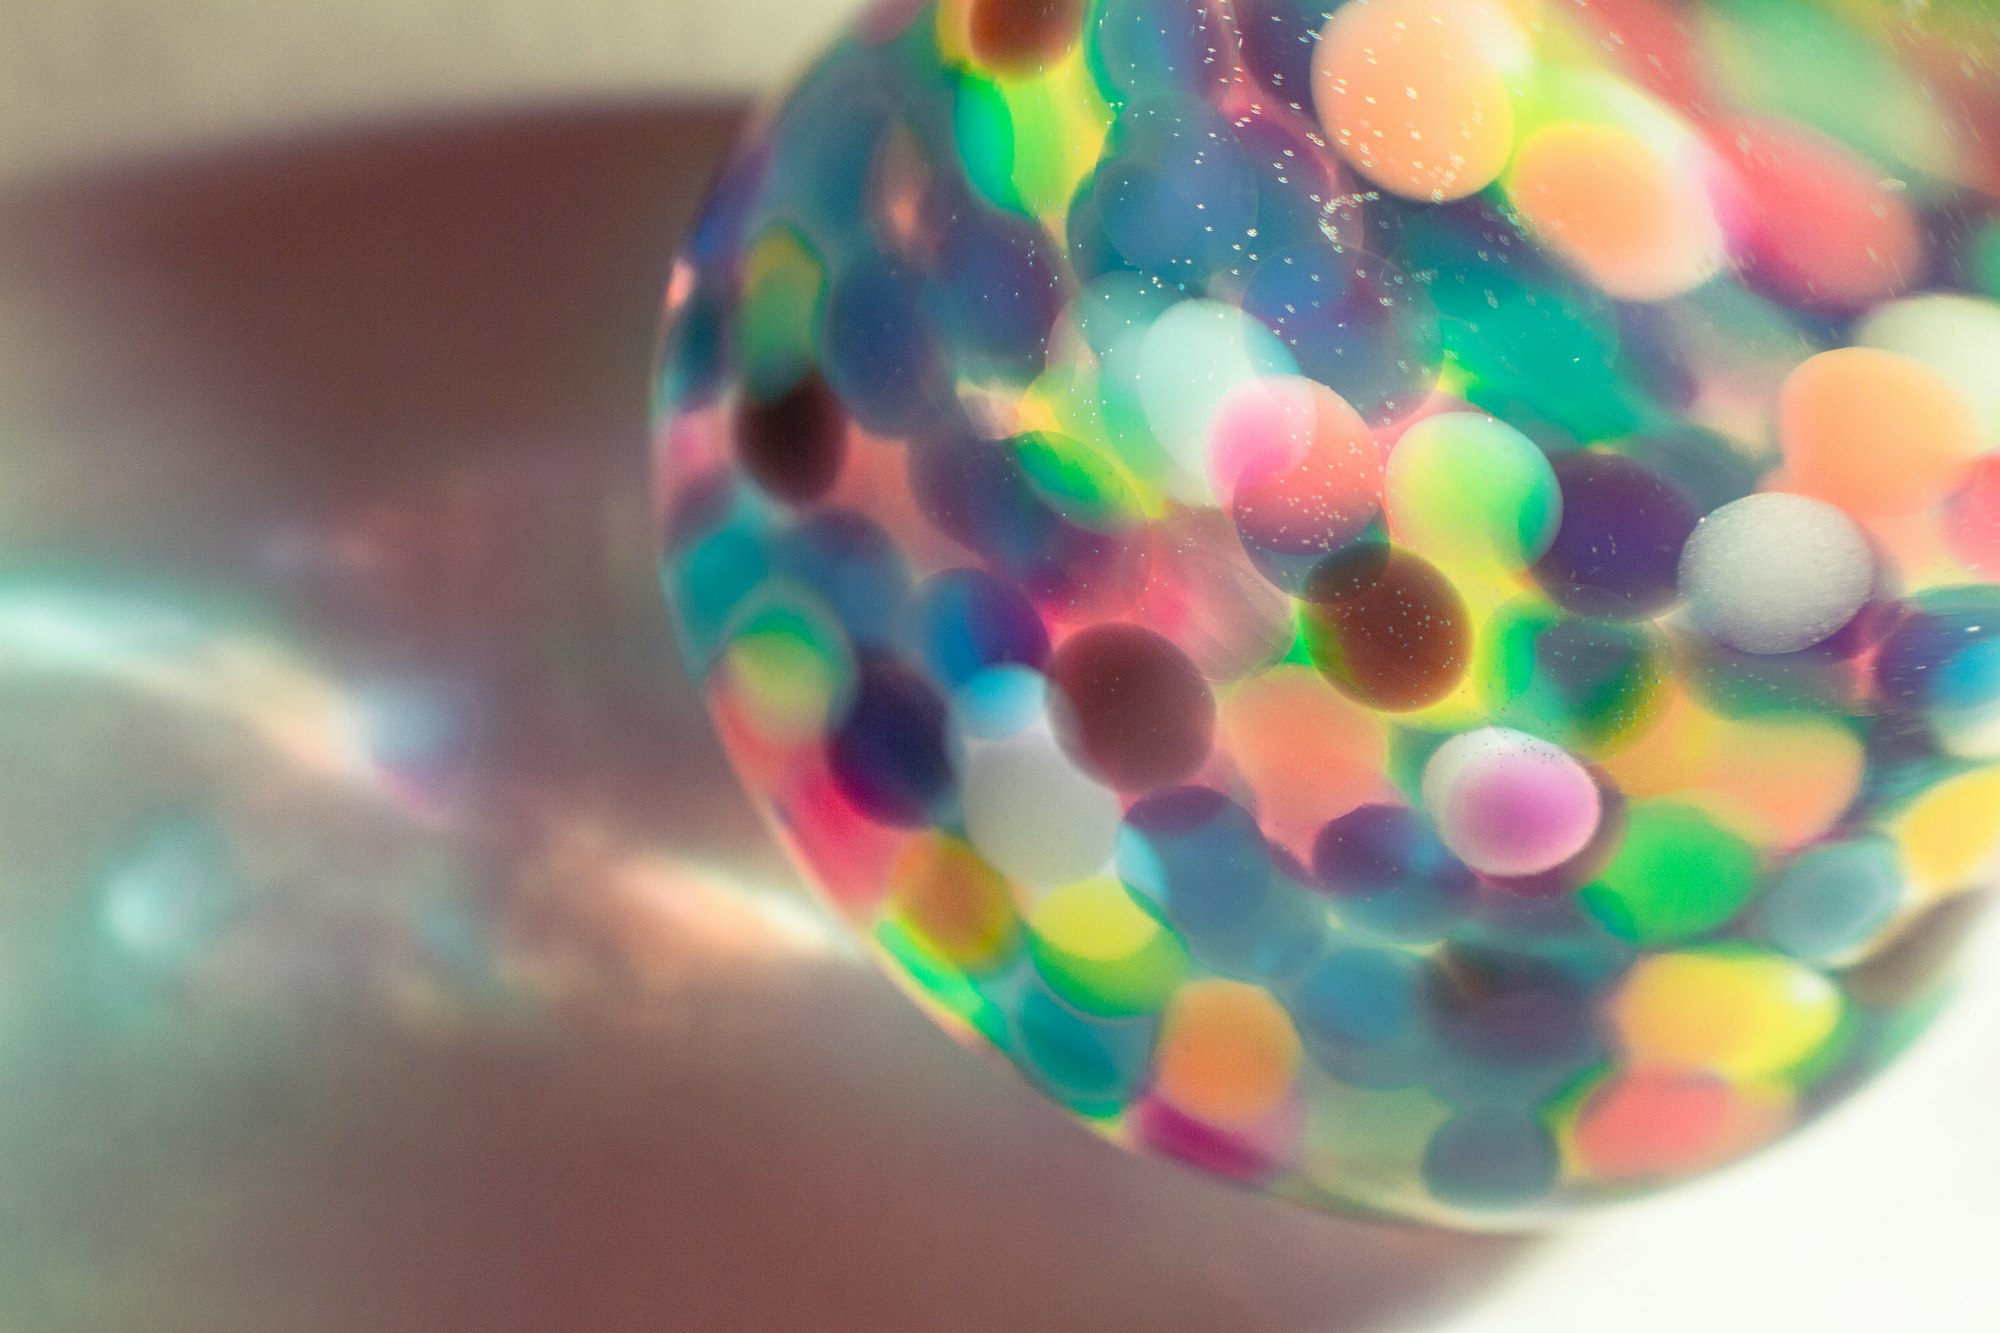 Colorful gel pearls inside erlenmeyer flaks